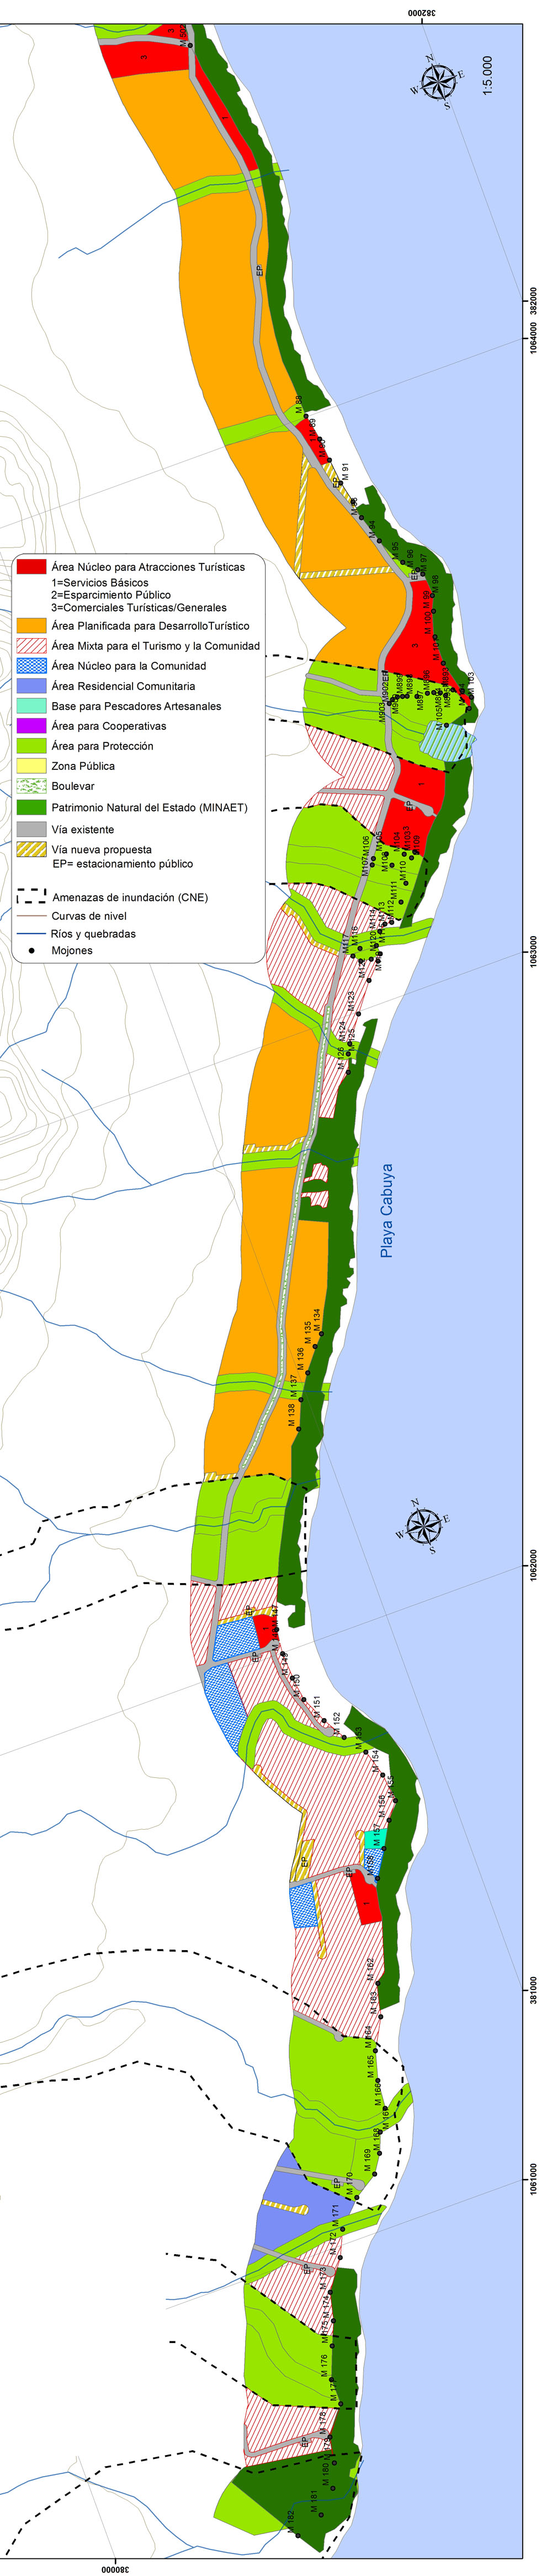 Plano Regulador for the Cabuya beaches area